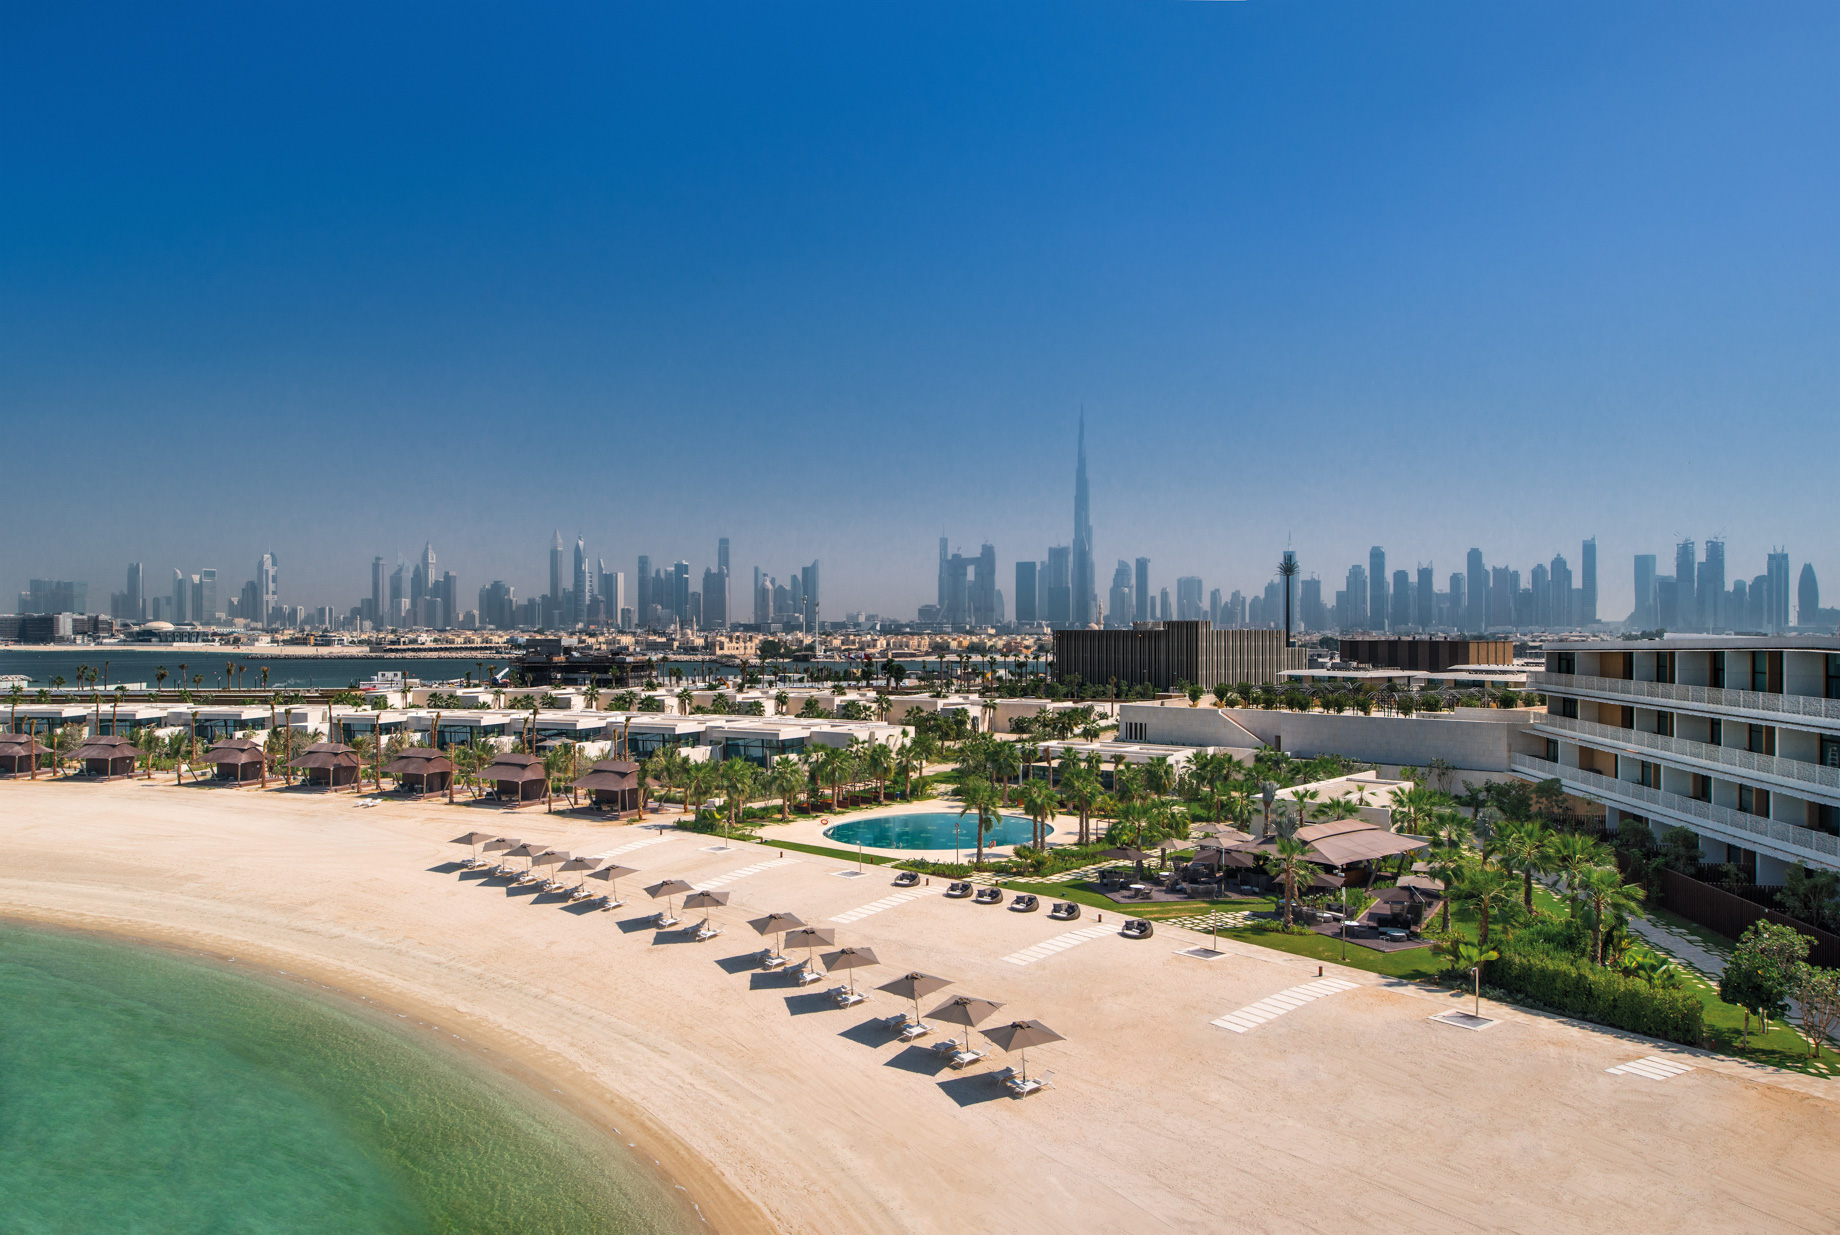 Bvlgari Resort Dubai - Jumeira Bay Island, Dubai, UAE - Private Beach